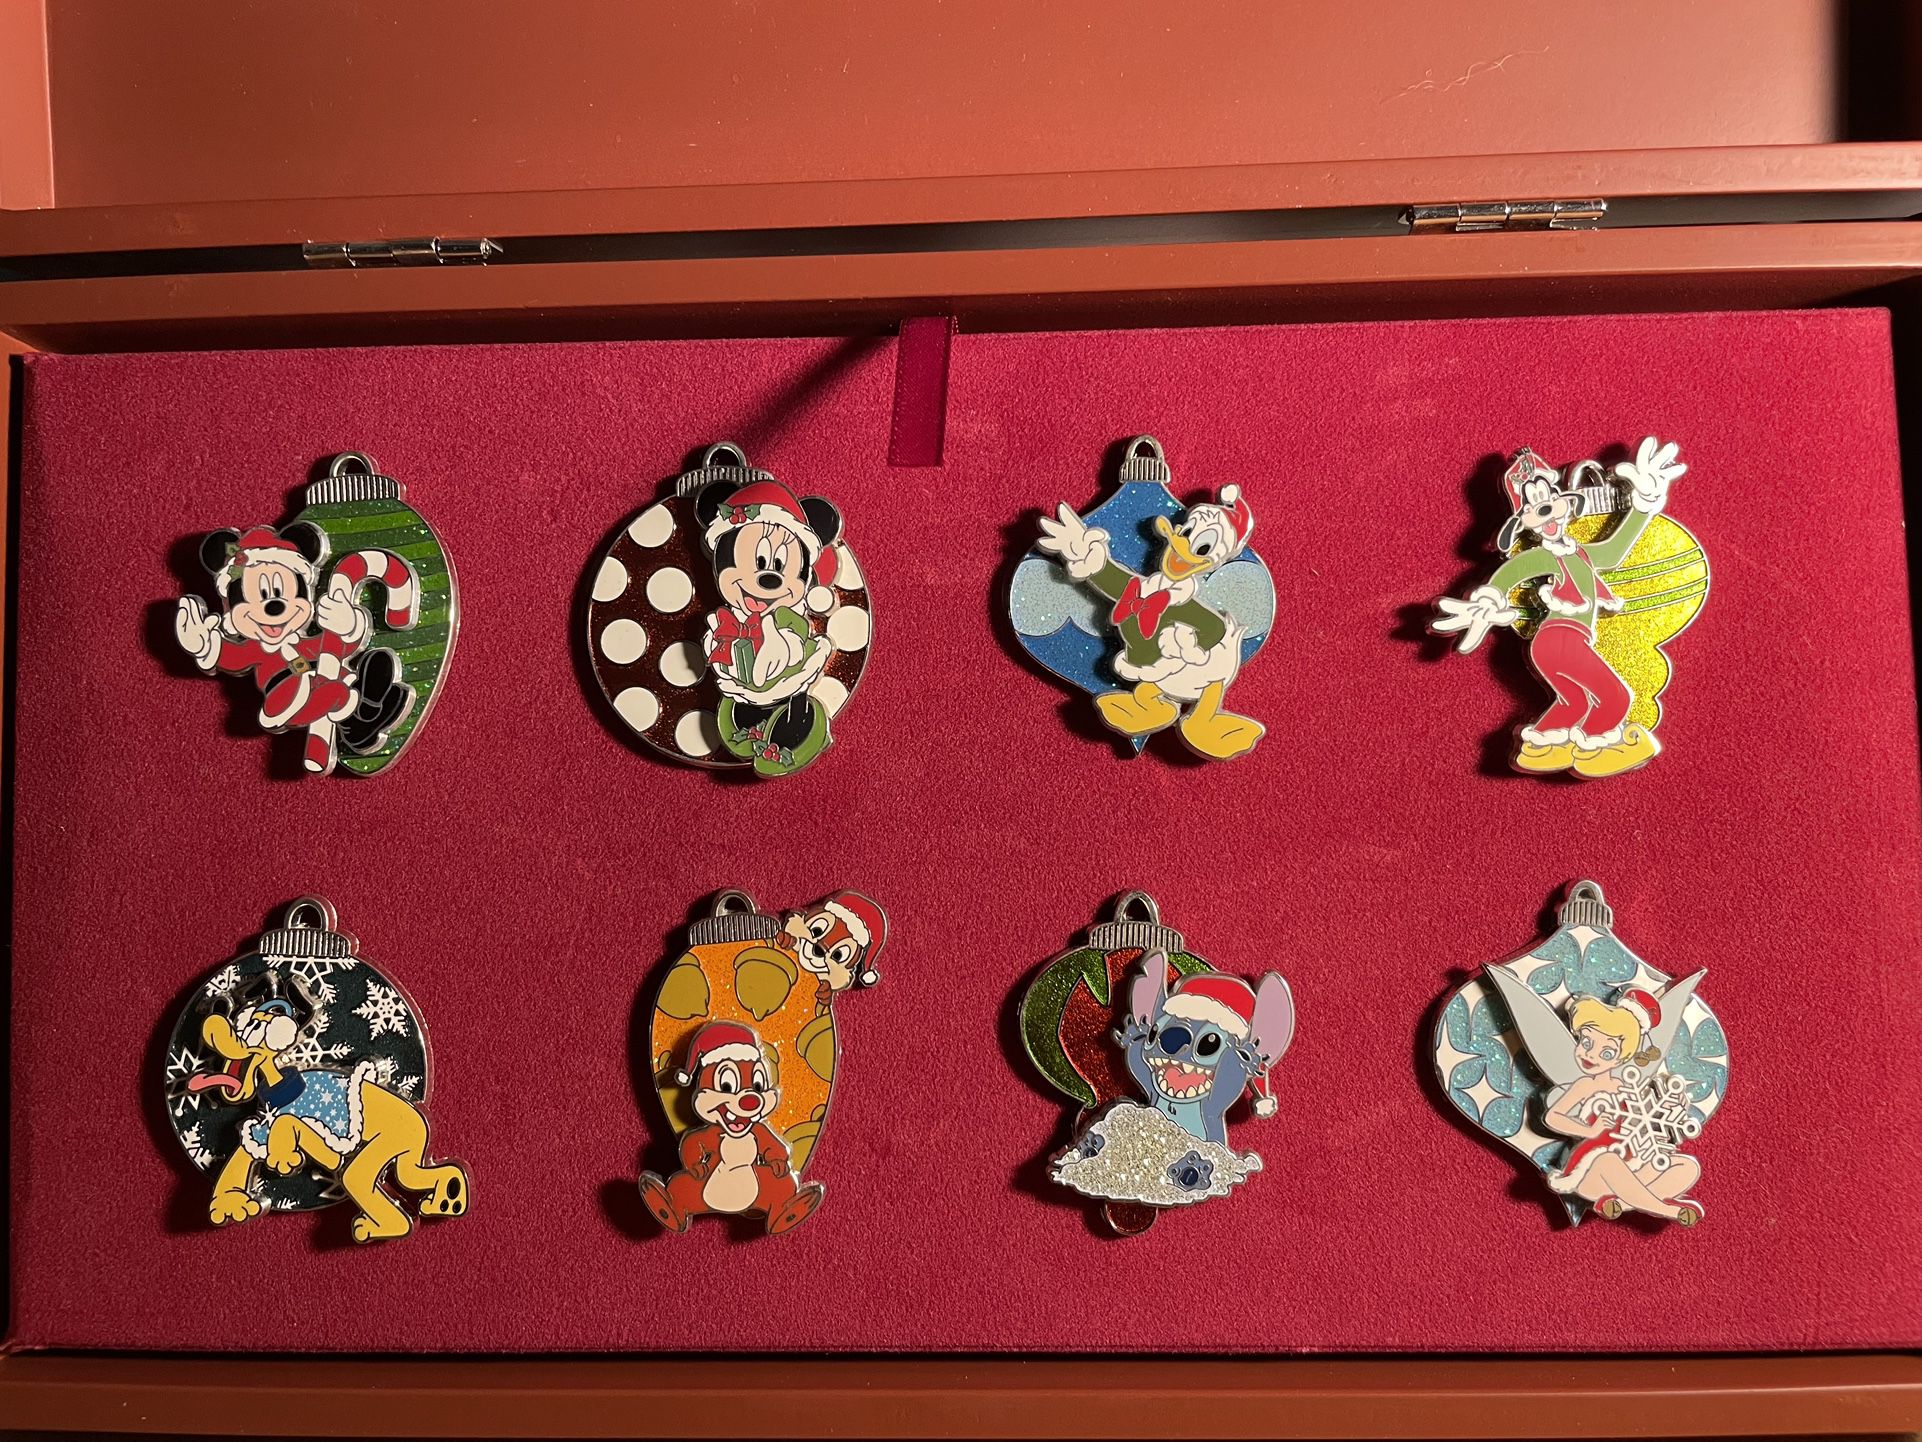 2006 Christmas Ornament Disney World Pin Set